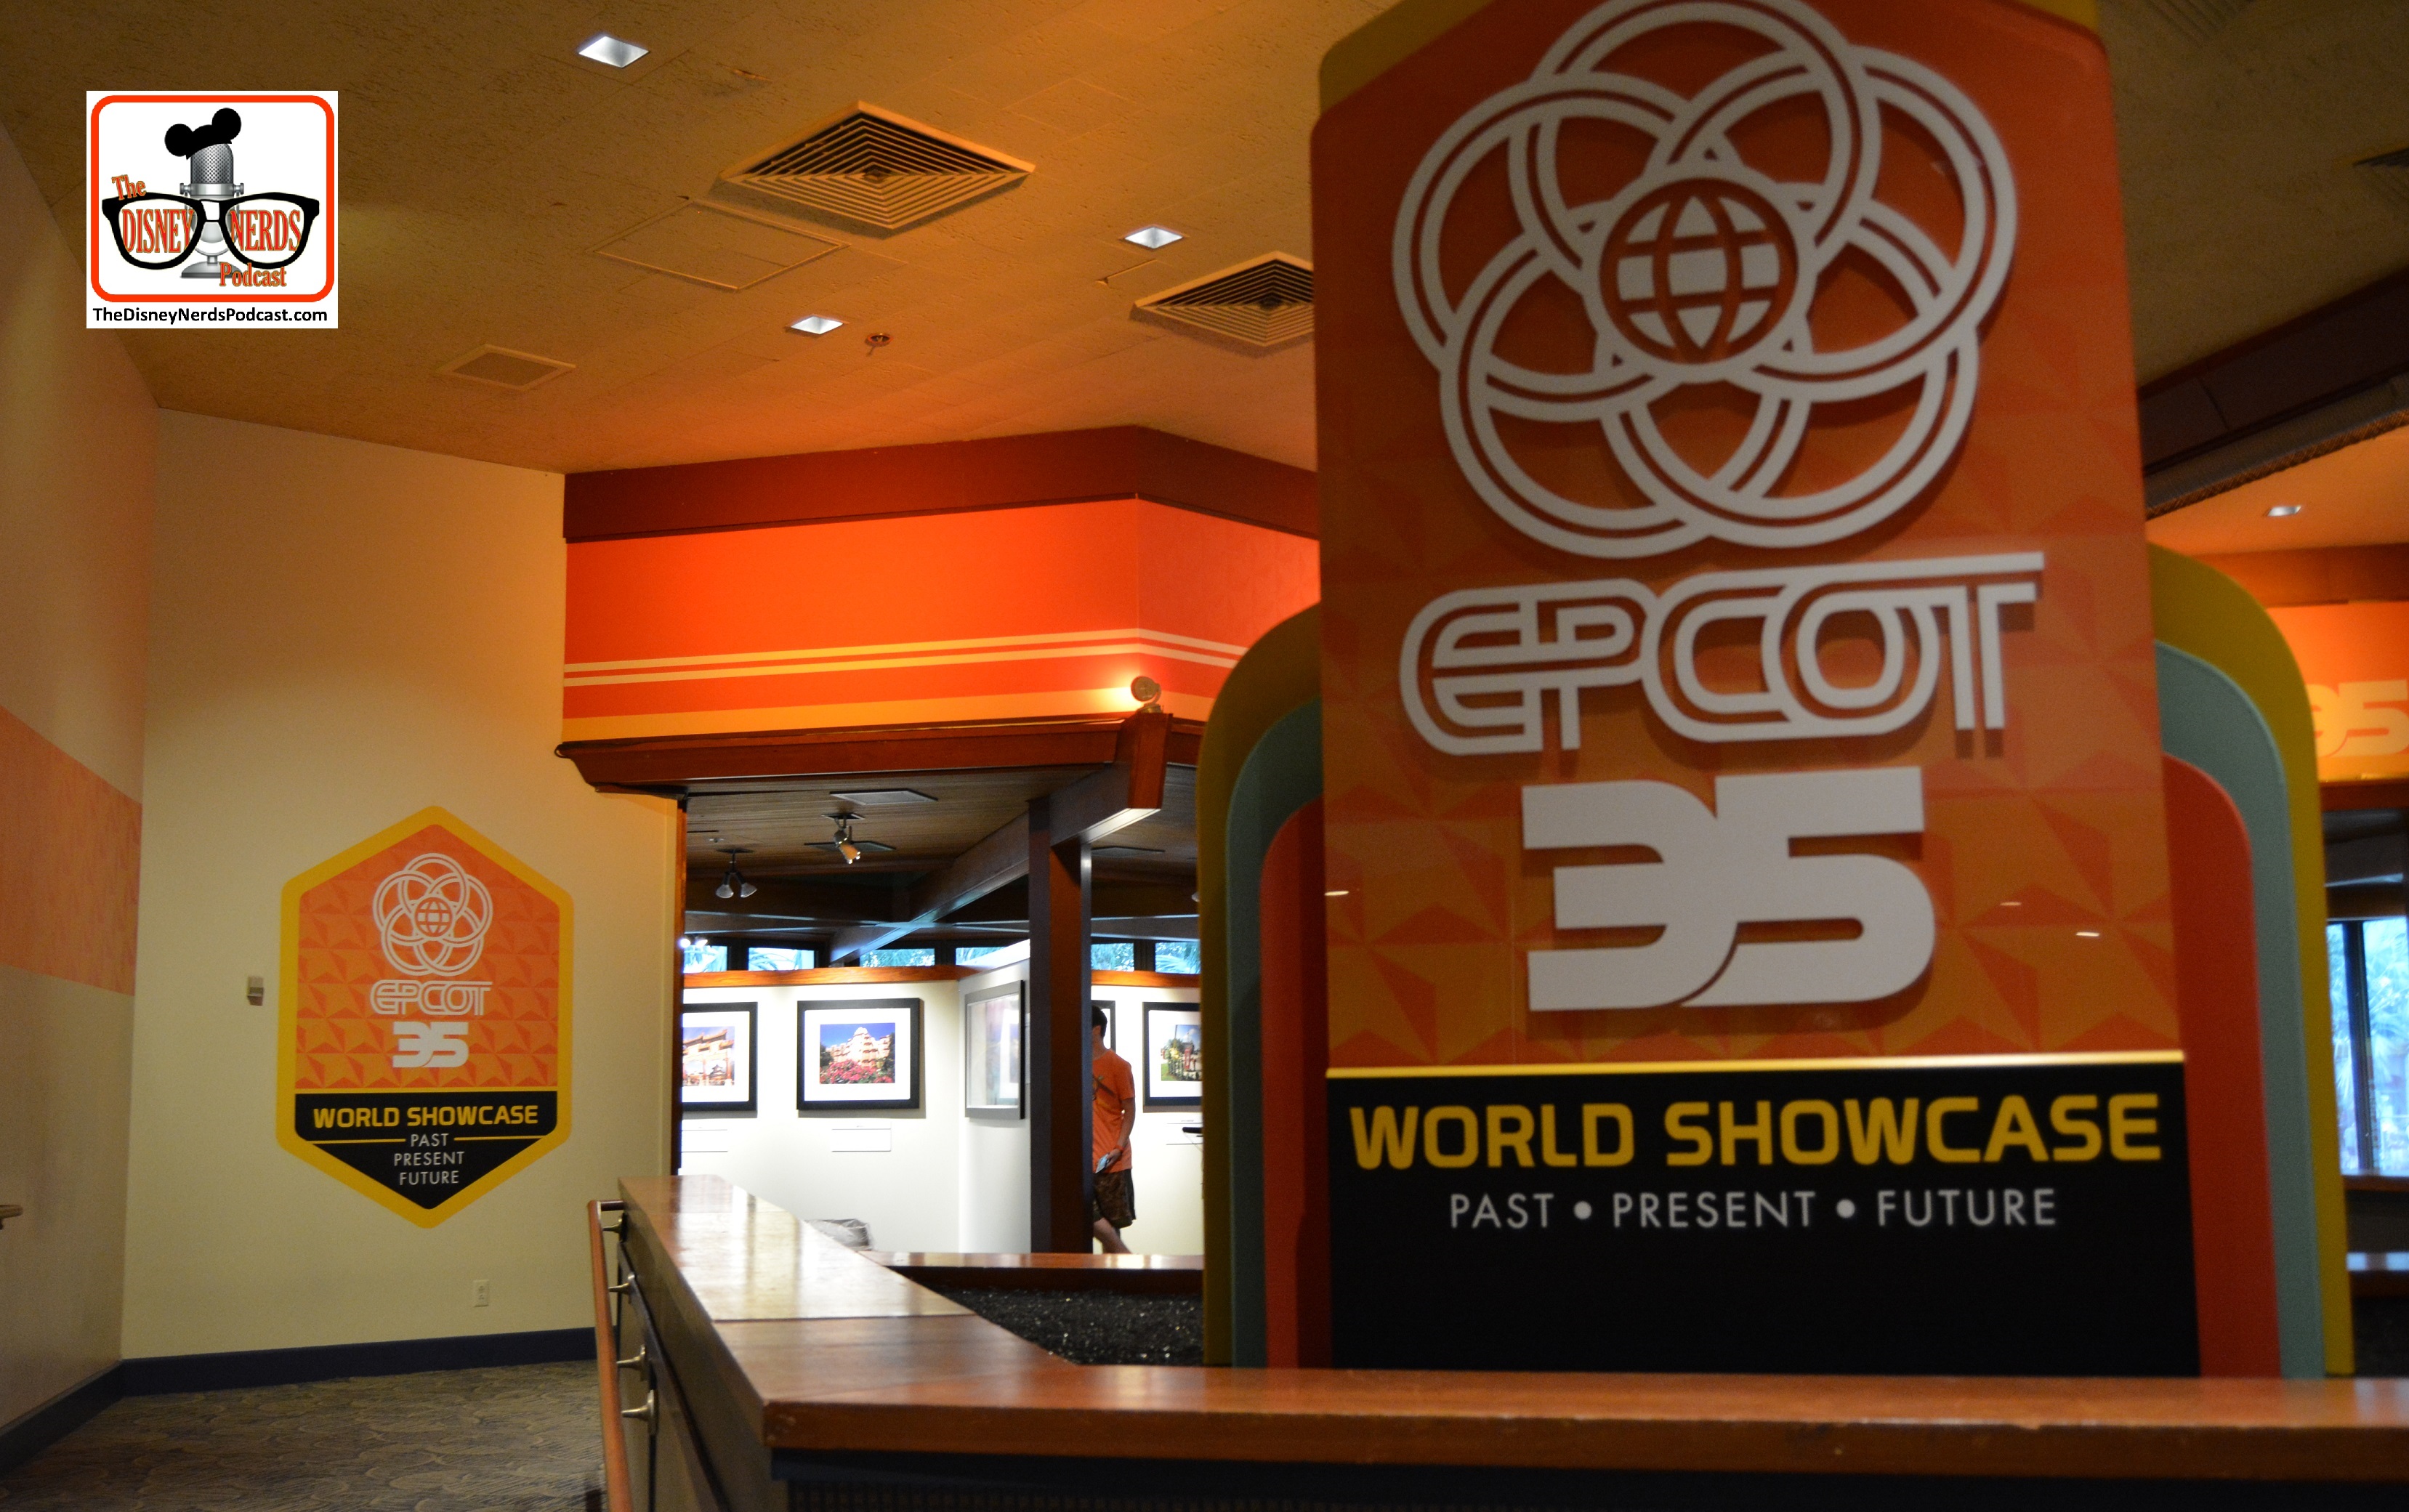 Epcot Legacy Showplace - World Showcase - Past Present and Future #Epcot35